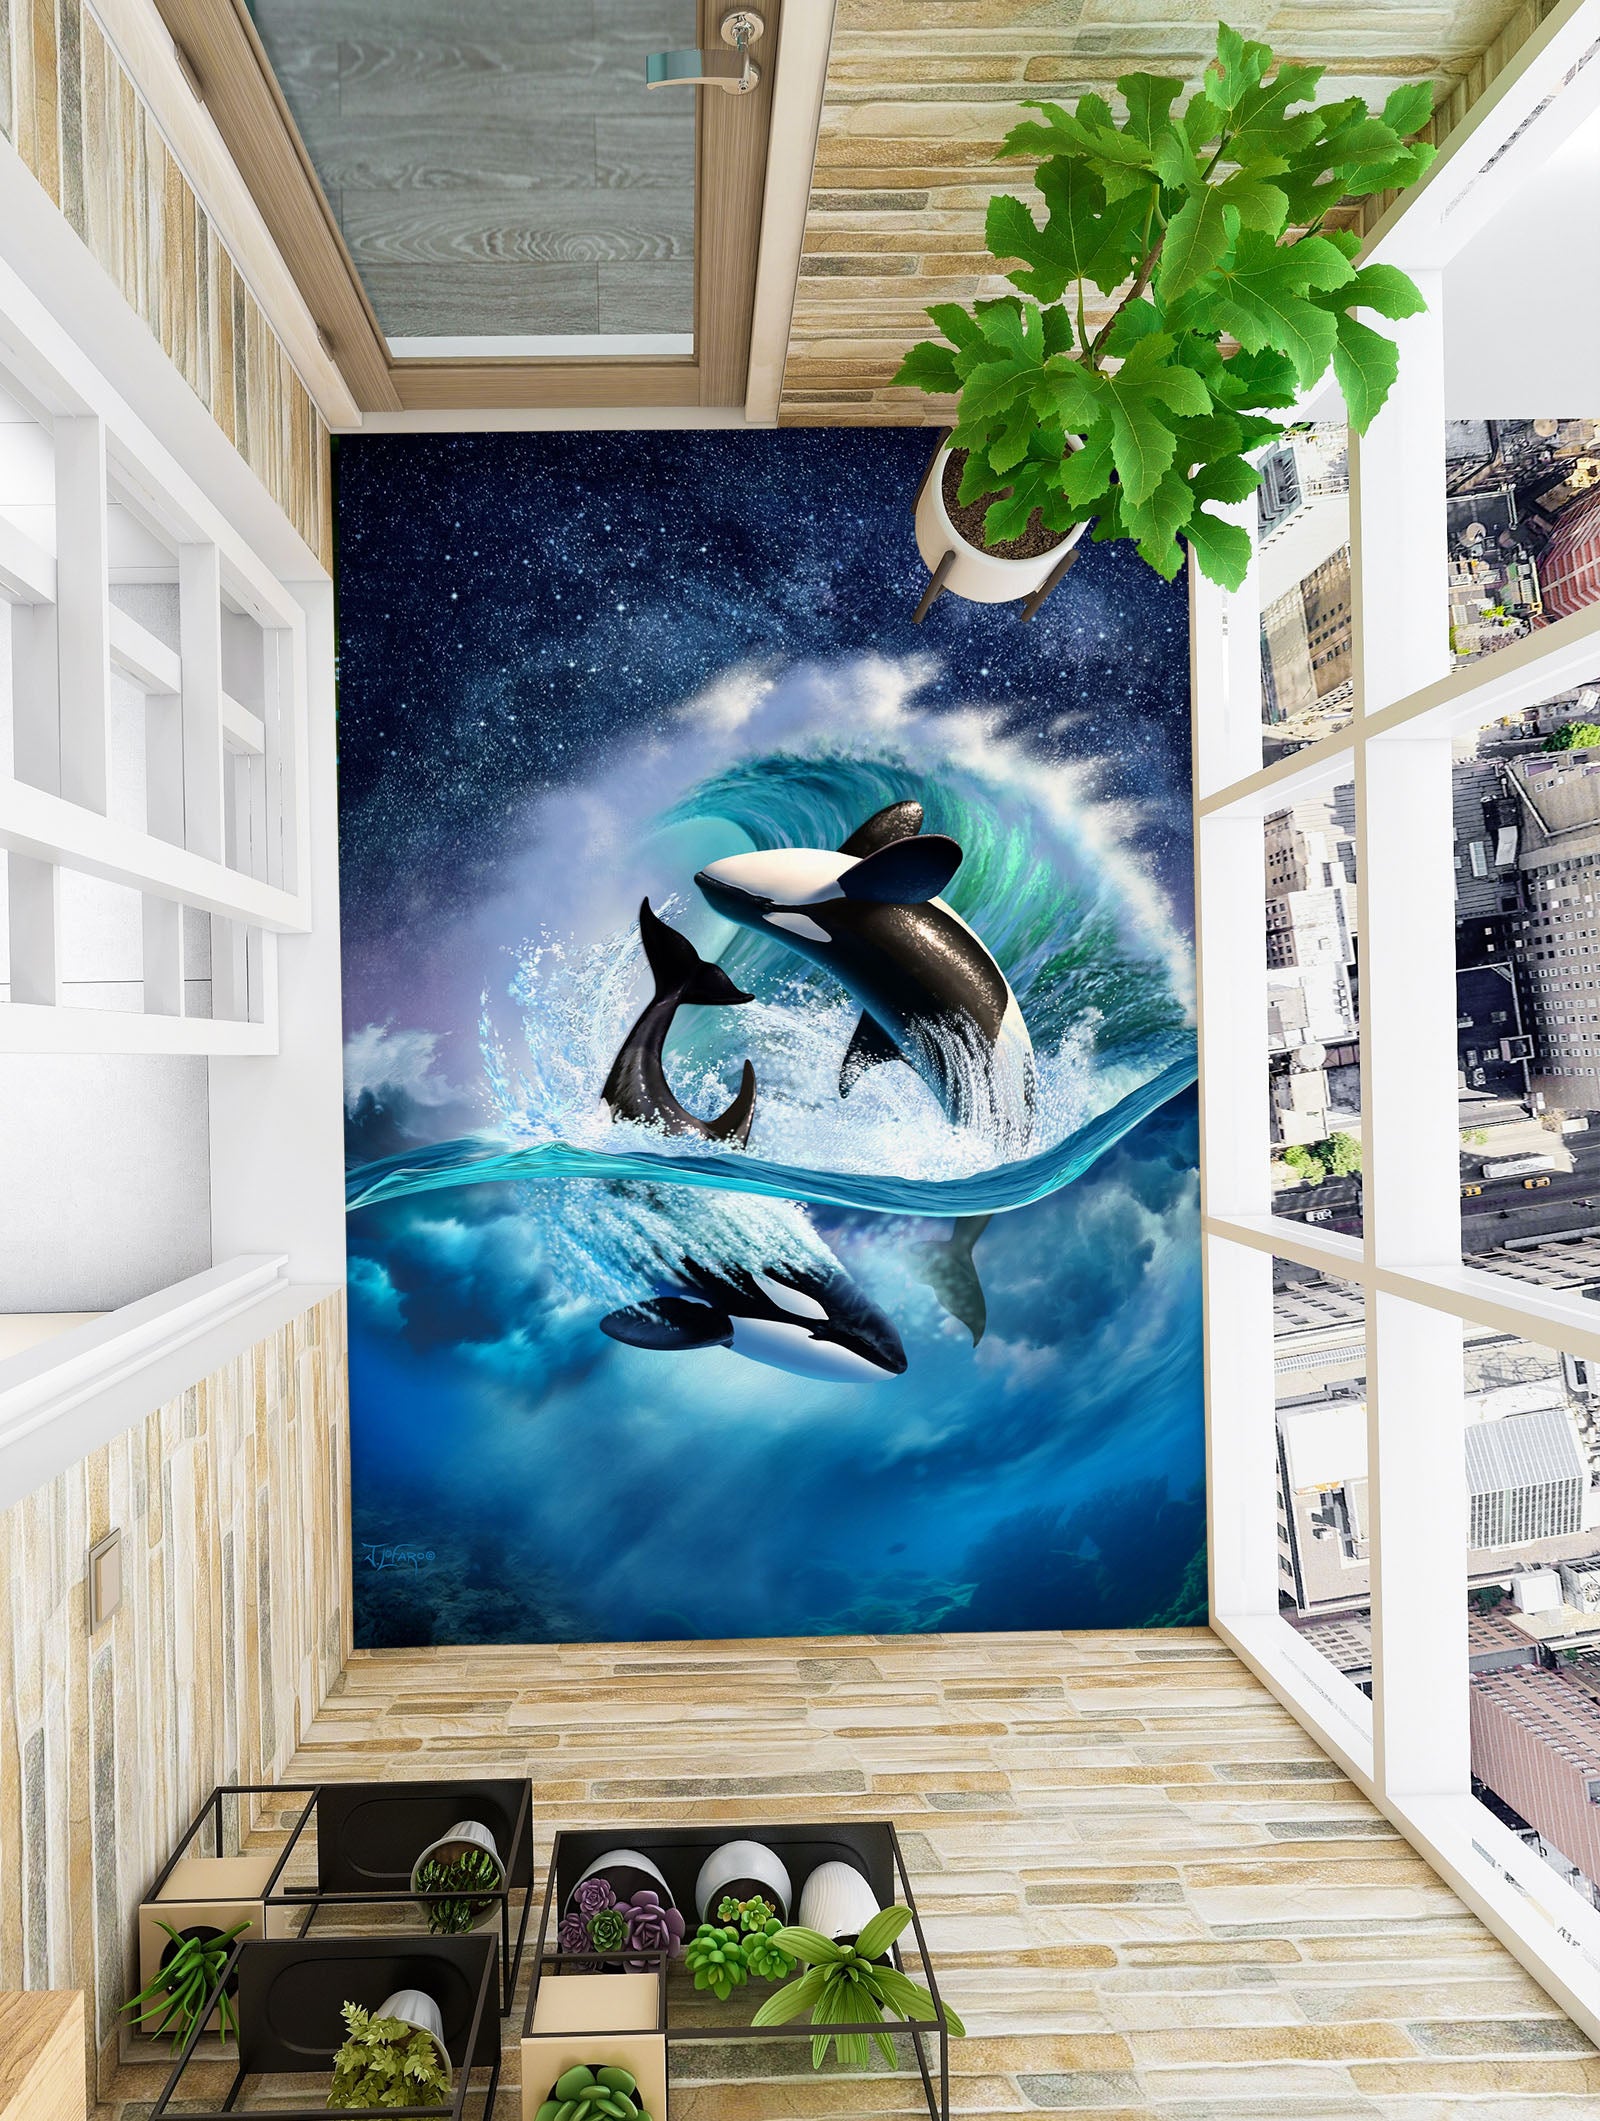 3D Whale Waves 96223 Jerry LoFaro Floor Mural  Wallpaper Murals Self-Adhesive Removable Print Epoxy